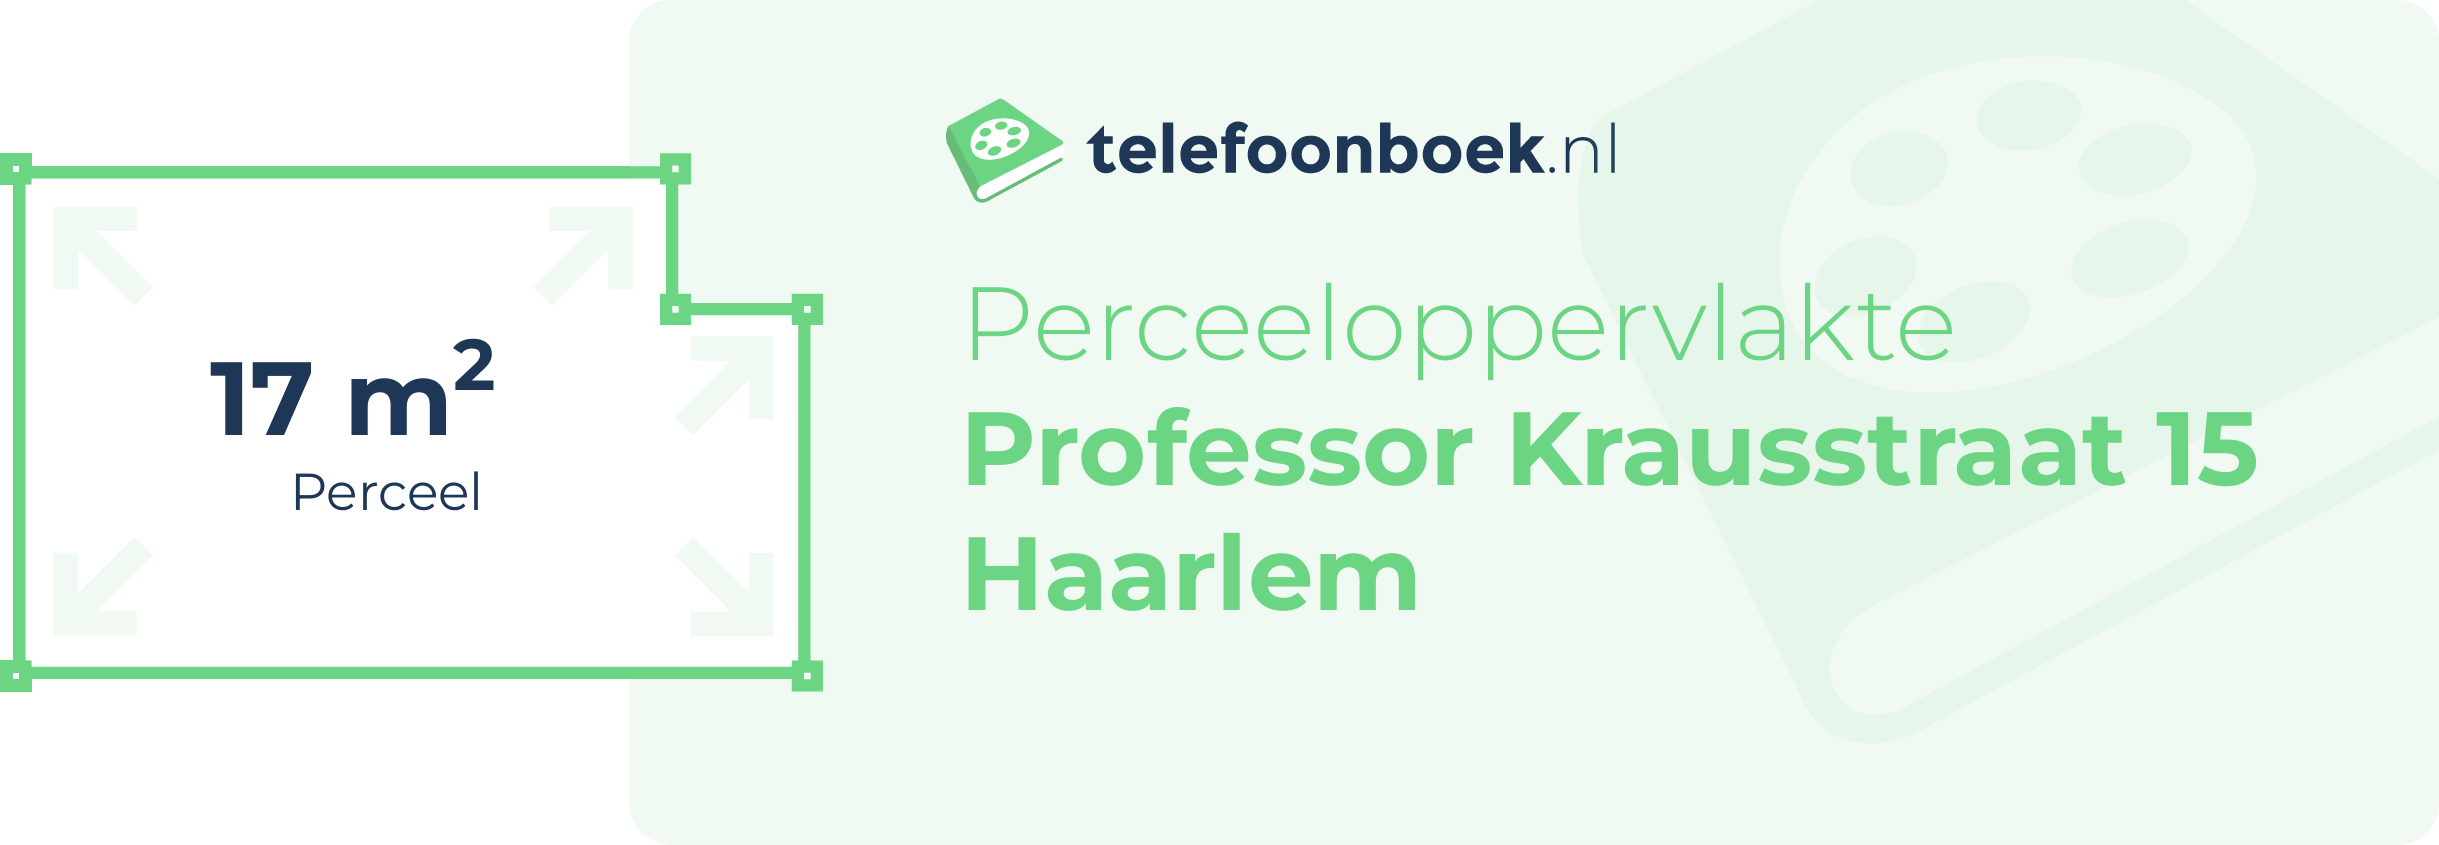 Perceeloppervlakte Professor Krausstraat 15 Haarlem